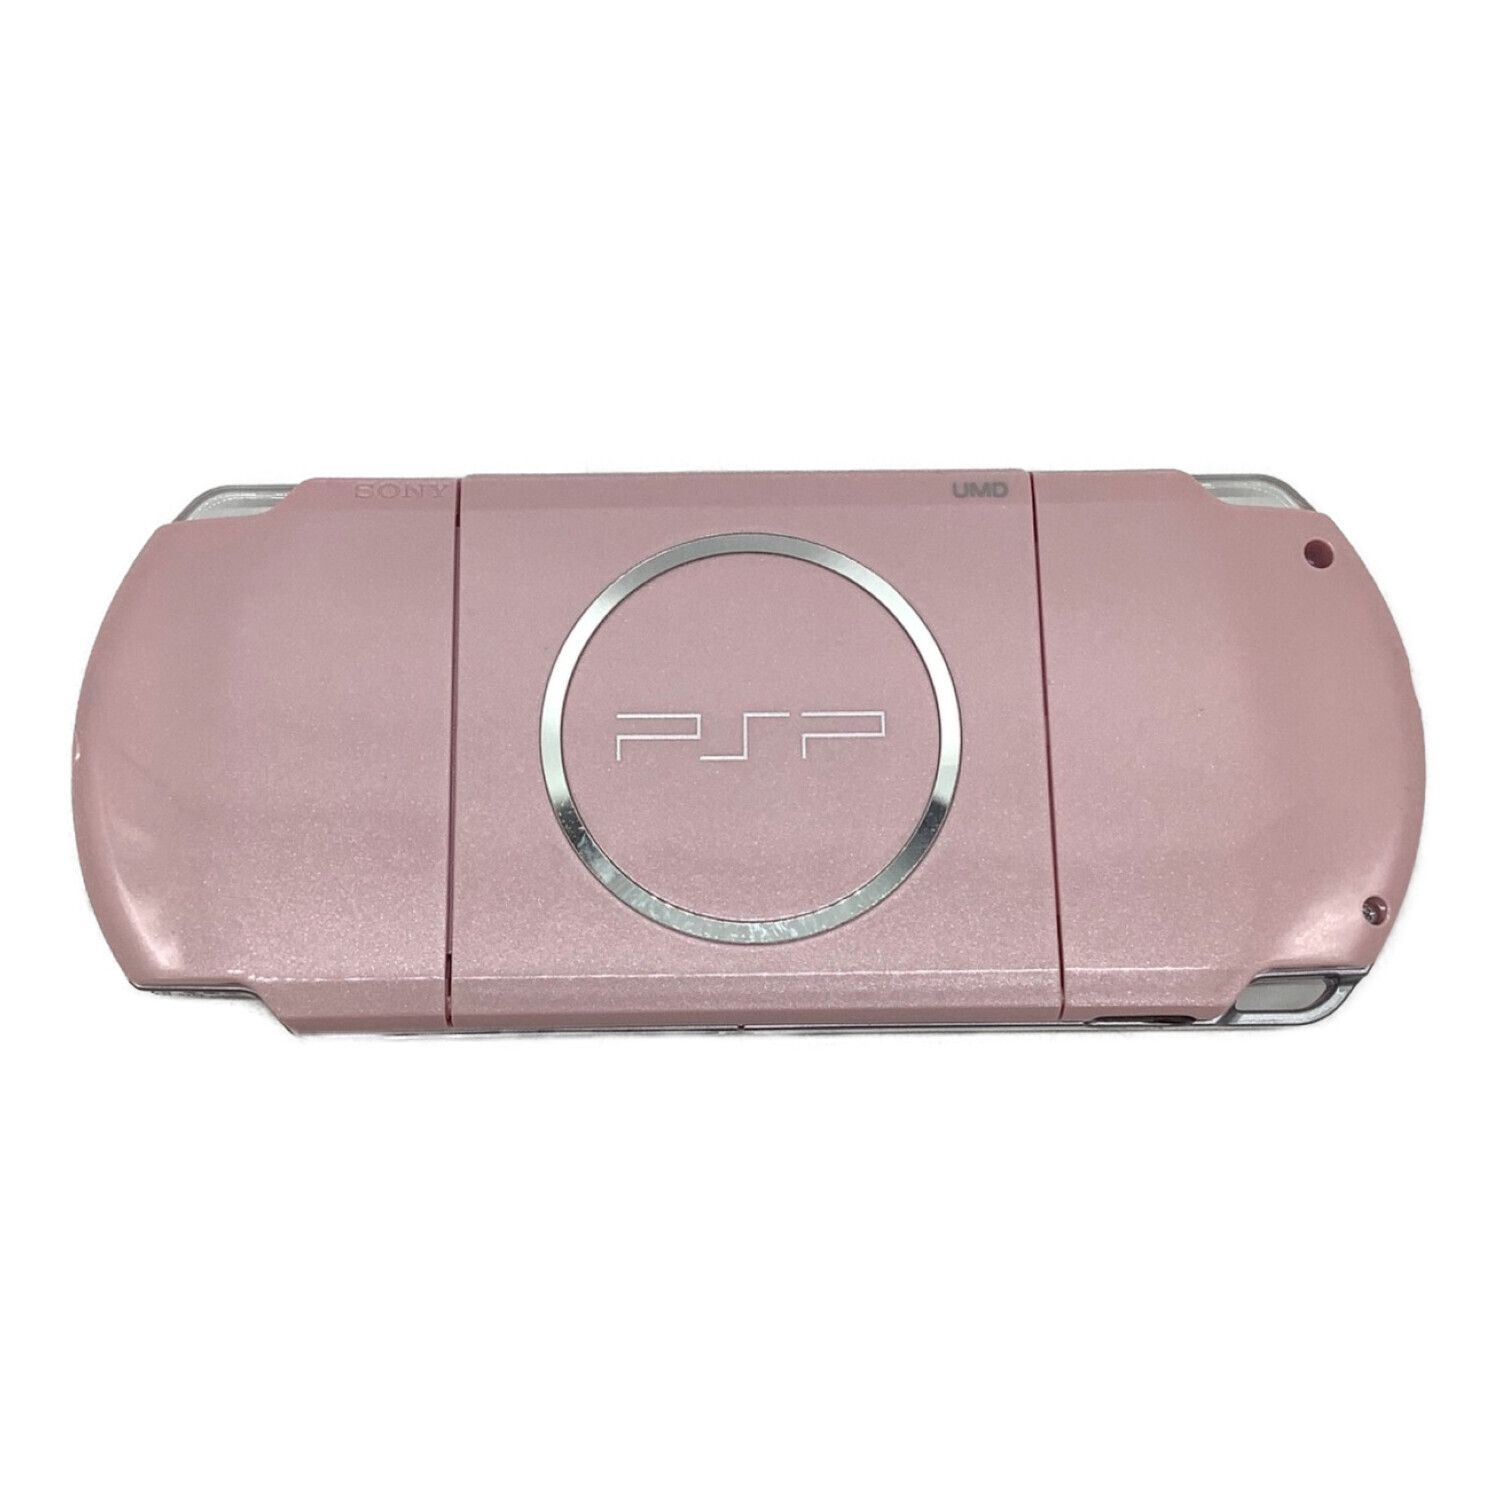 PSP-3000 ピンク 電池、ソフト付き